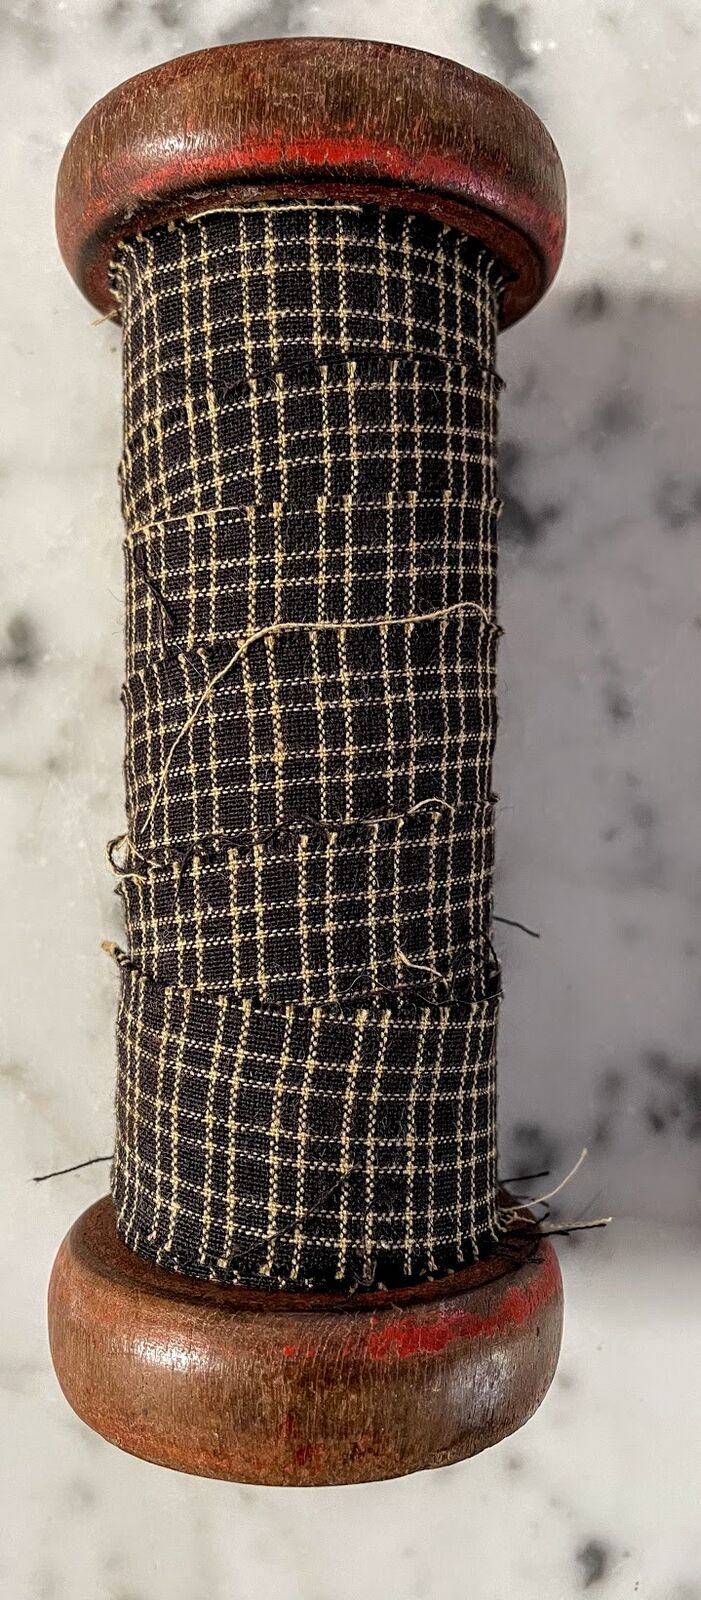 Black Plaid Cotton Homespun Fabric | Cabin Country Farmhouse Primitive  Fabric